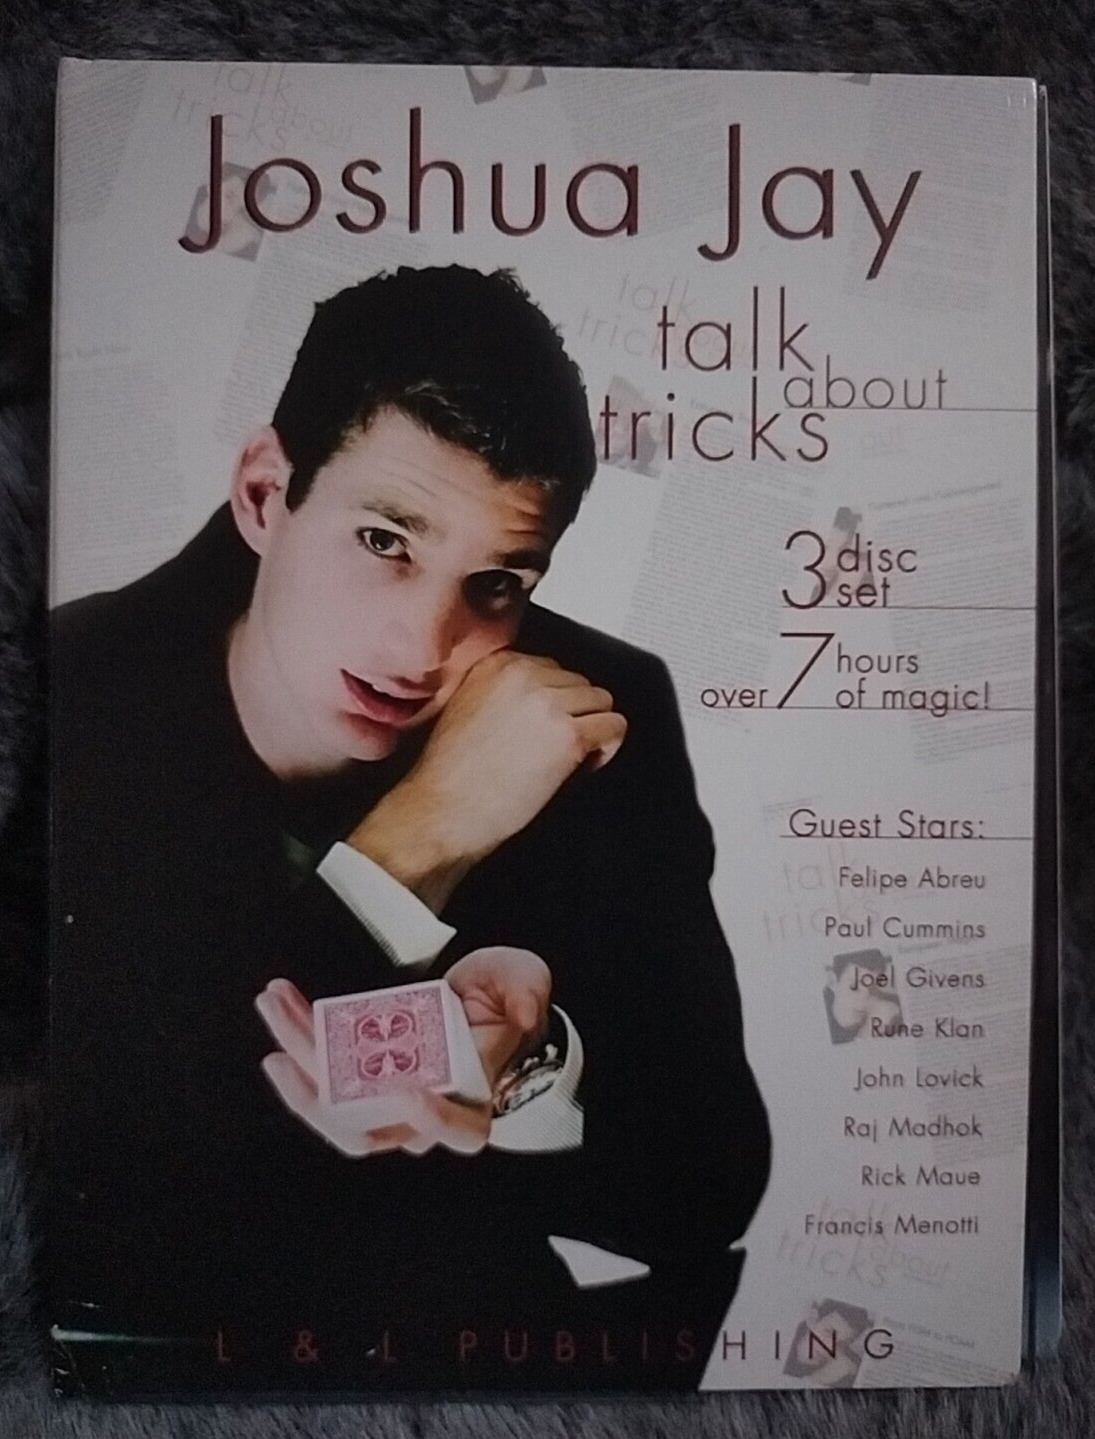 Talk About Tricks DVD, 3 disc Set - Joshua Jay, Magic